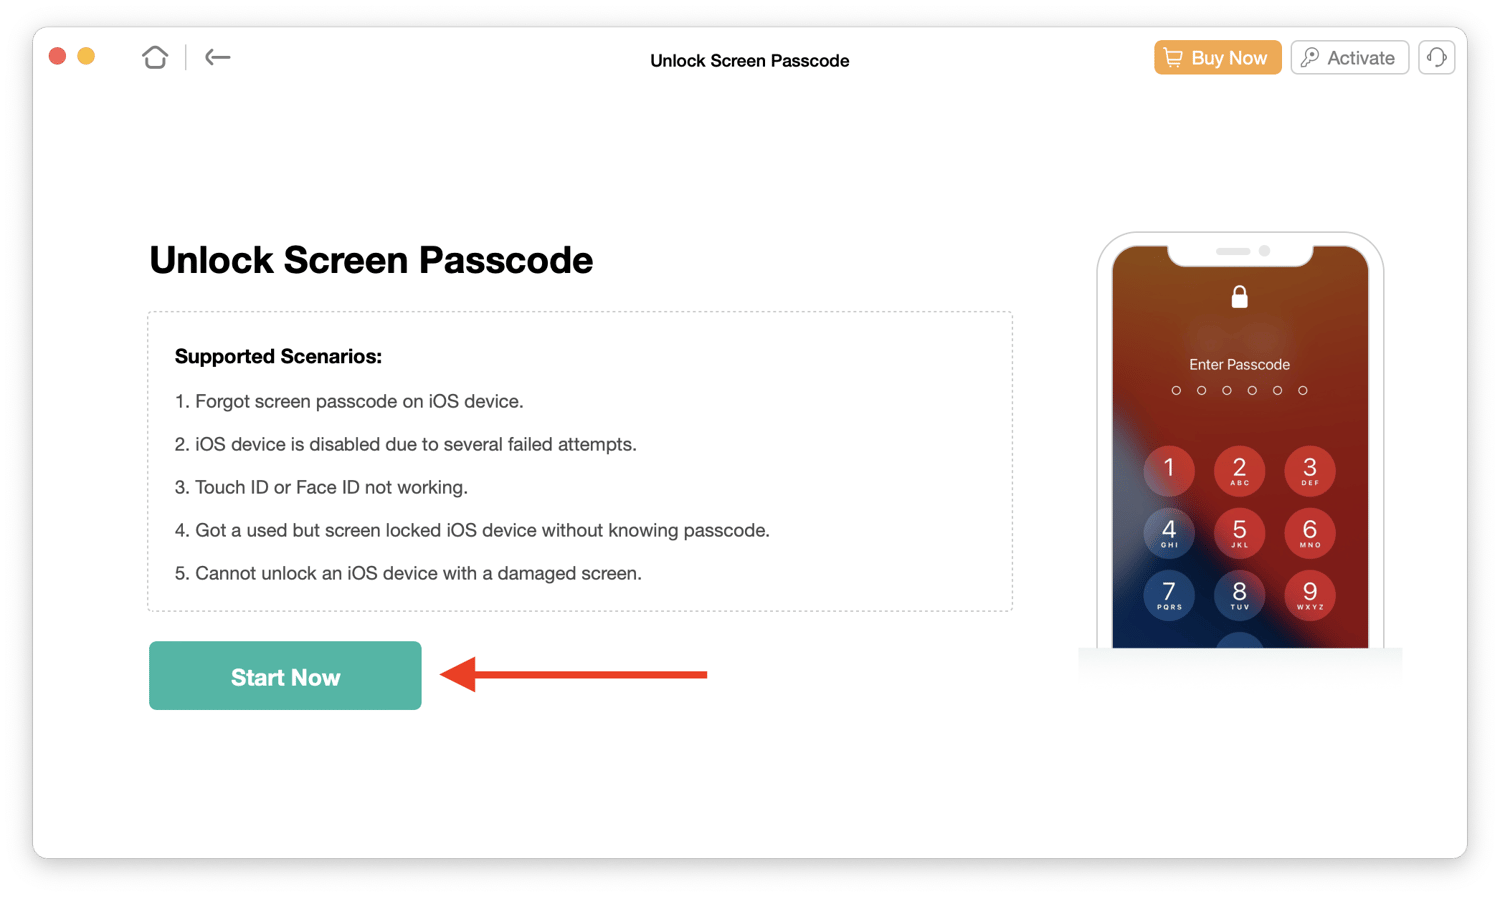 anyunlock unlock screen passcode